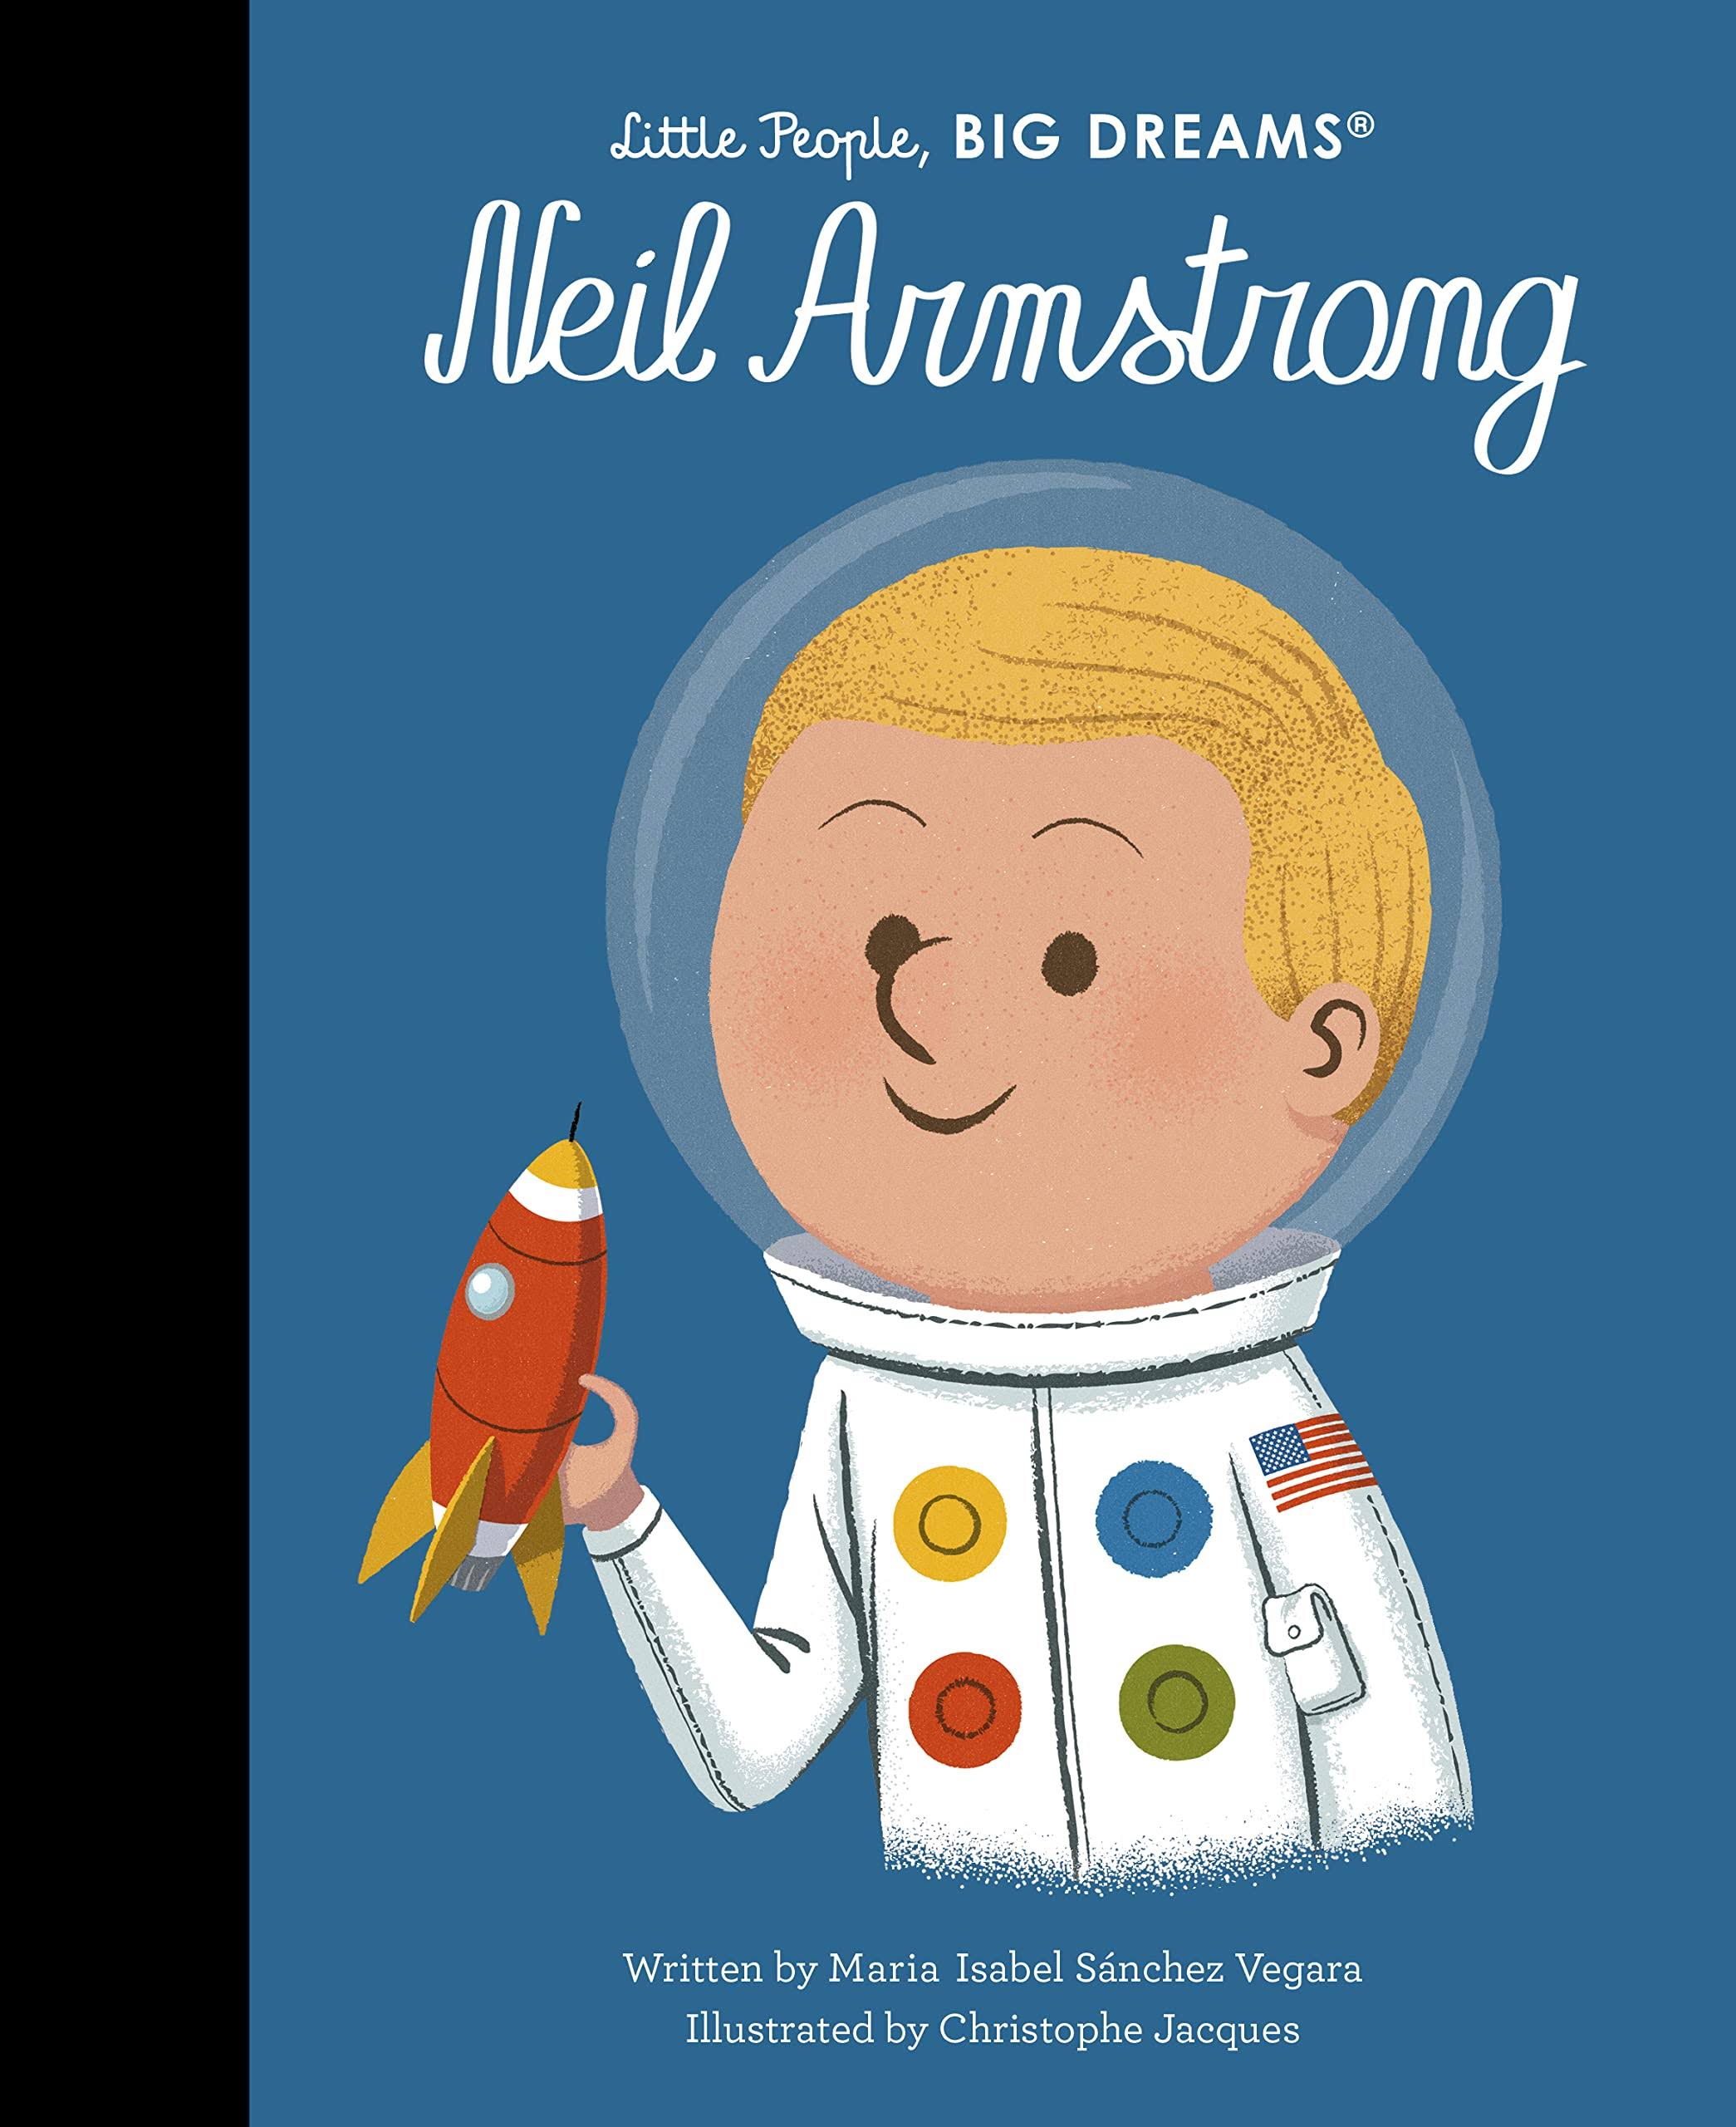 Neil Armstrong by Maria Isabel Sanchez Vegara